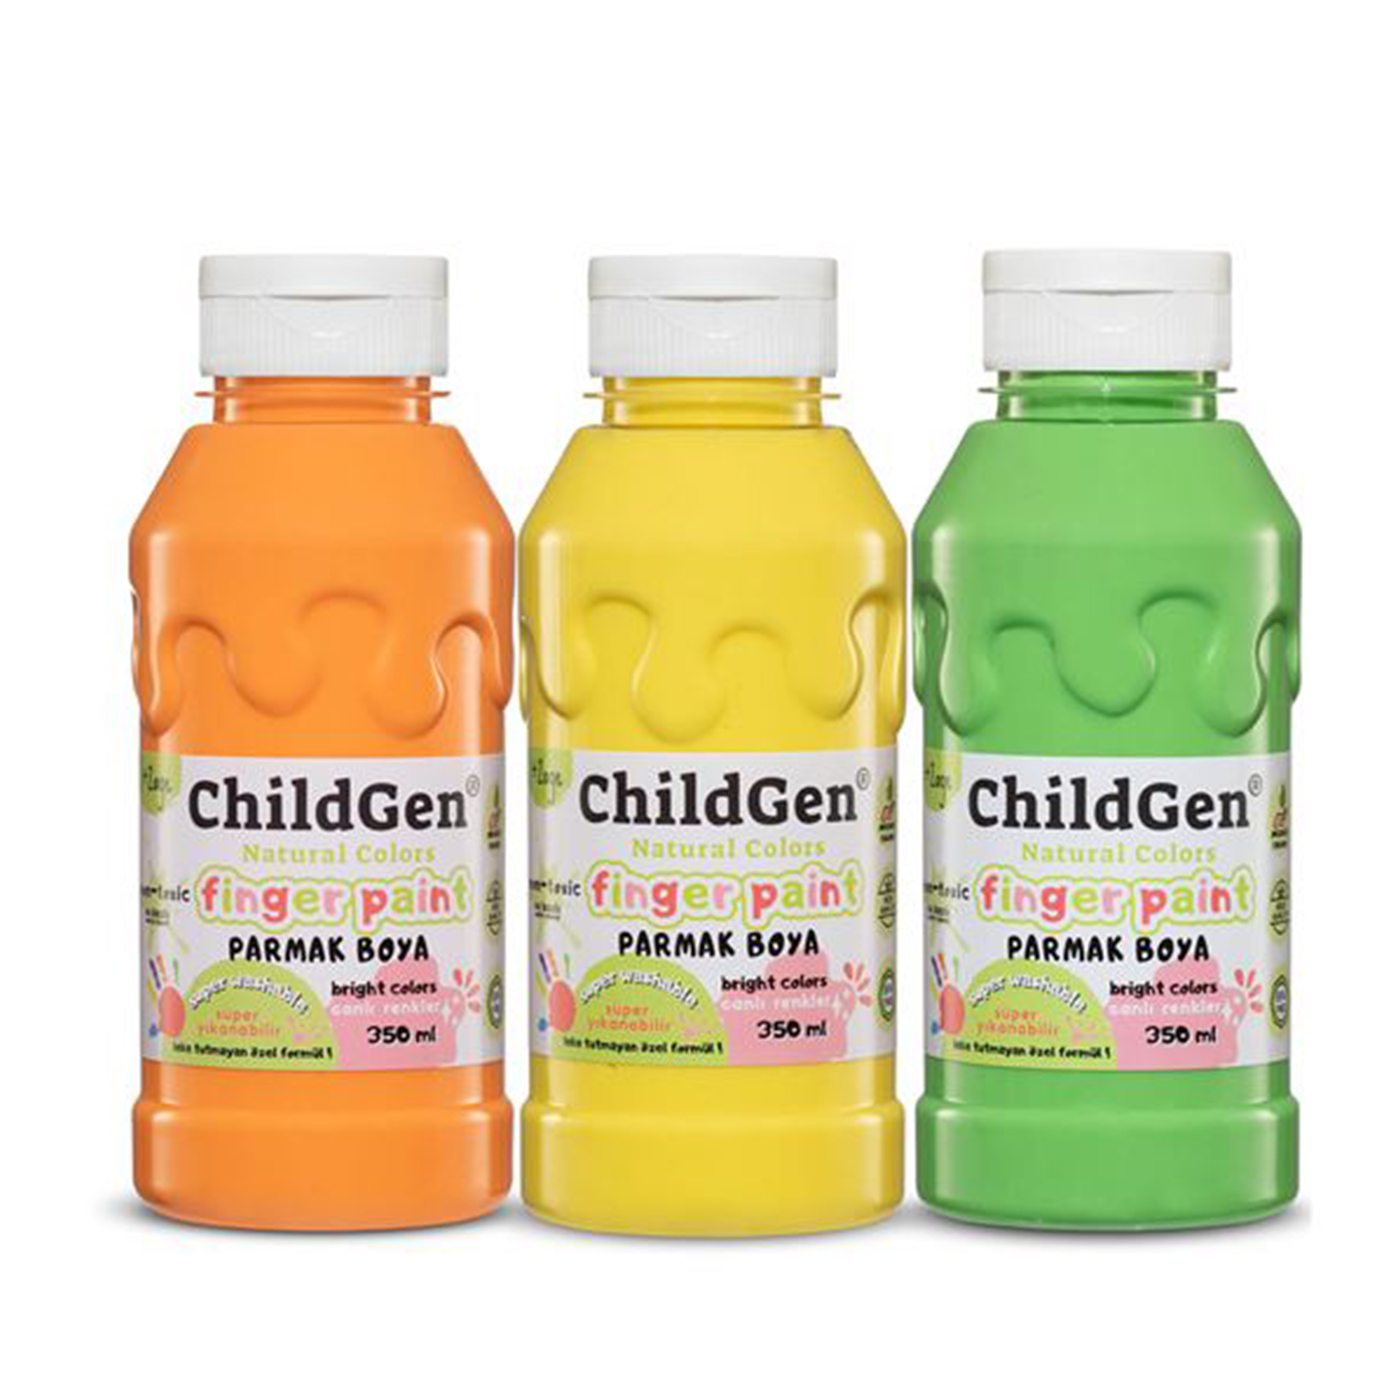 CHILDGEN Childgen Süper Yıkanabilir 3'lü Parmak Boya Pastel Set (350 ml x 3) - 1. set